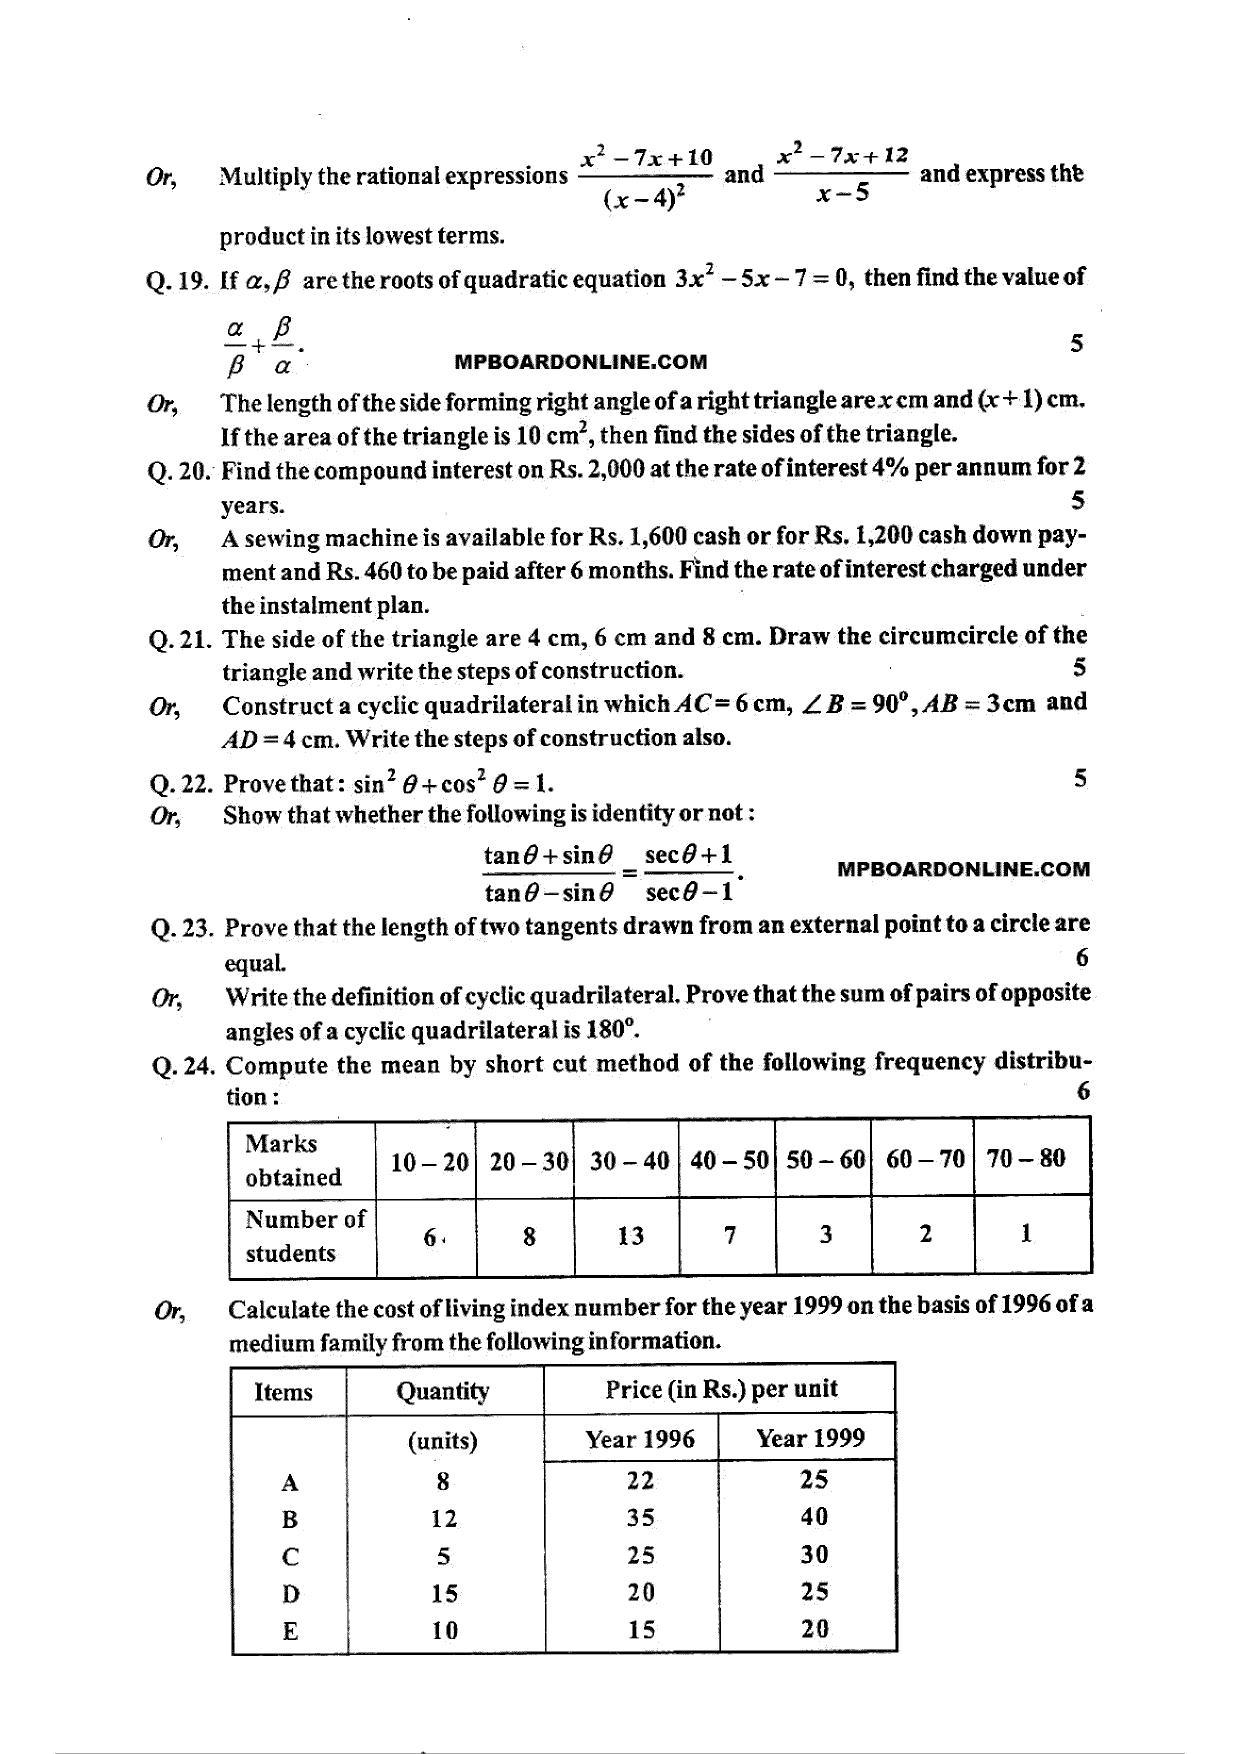 MP Board Class 10 Mathematica 2016 Question Paper - Page 4